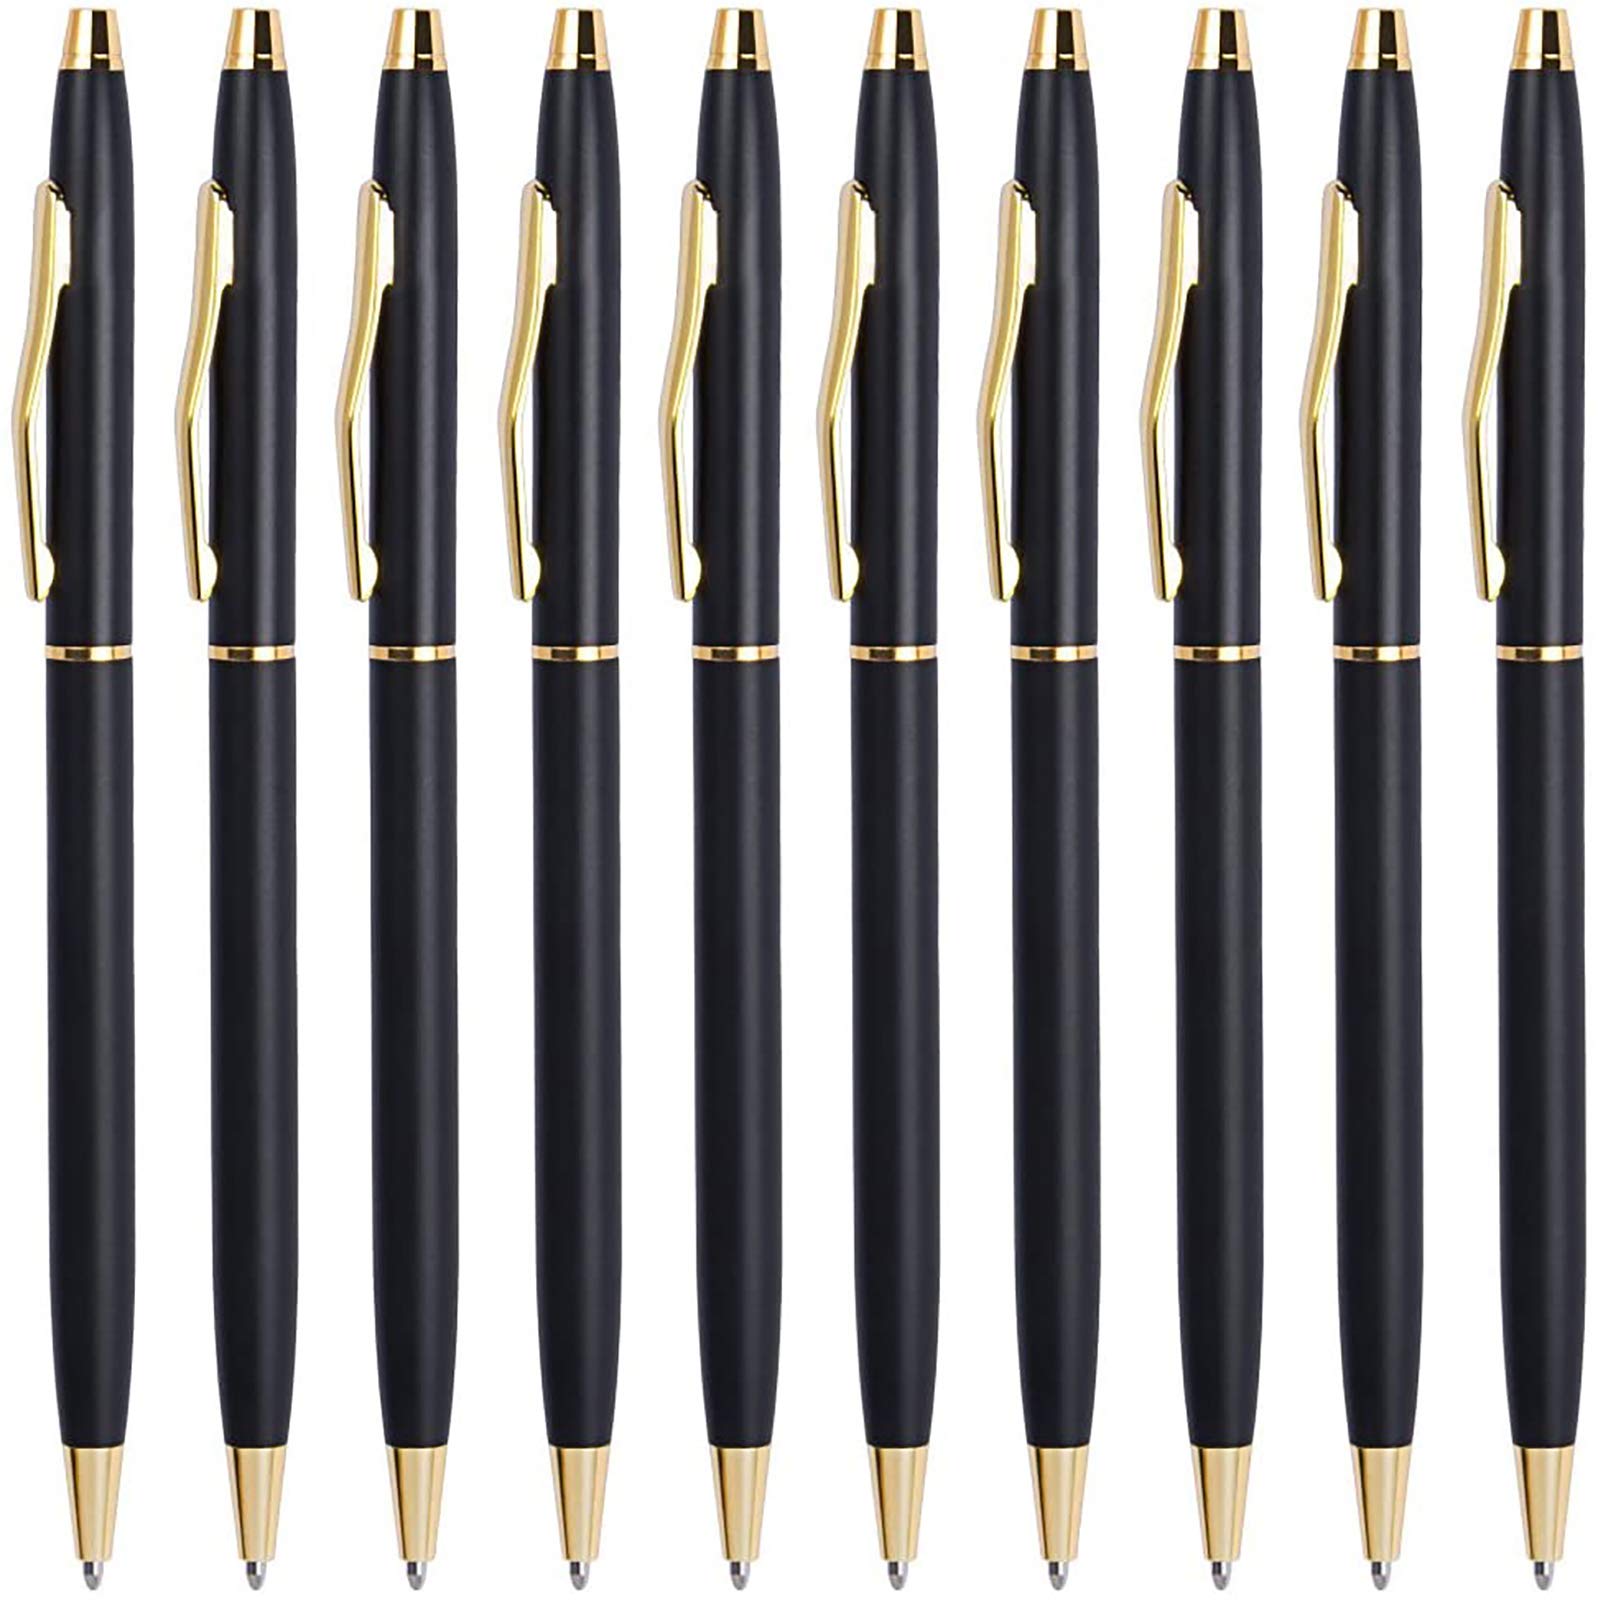 10pcs Black & Gold Ballpoint Pens - Smooth Writing, 1.0mm Medium Point -  Perfect For Men, Women, Office & Business Uniforms!